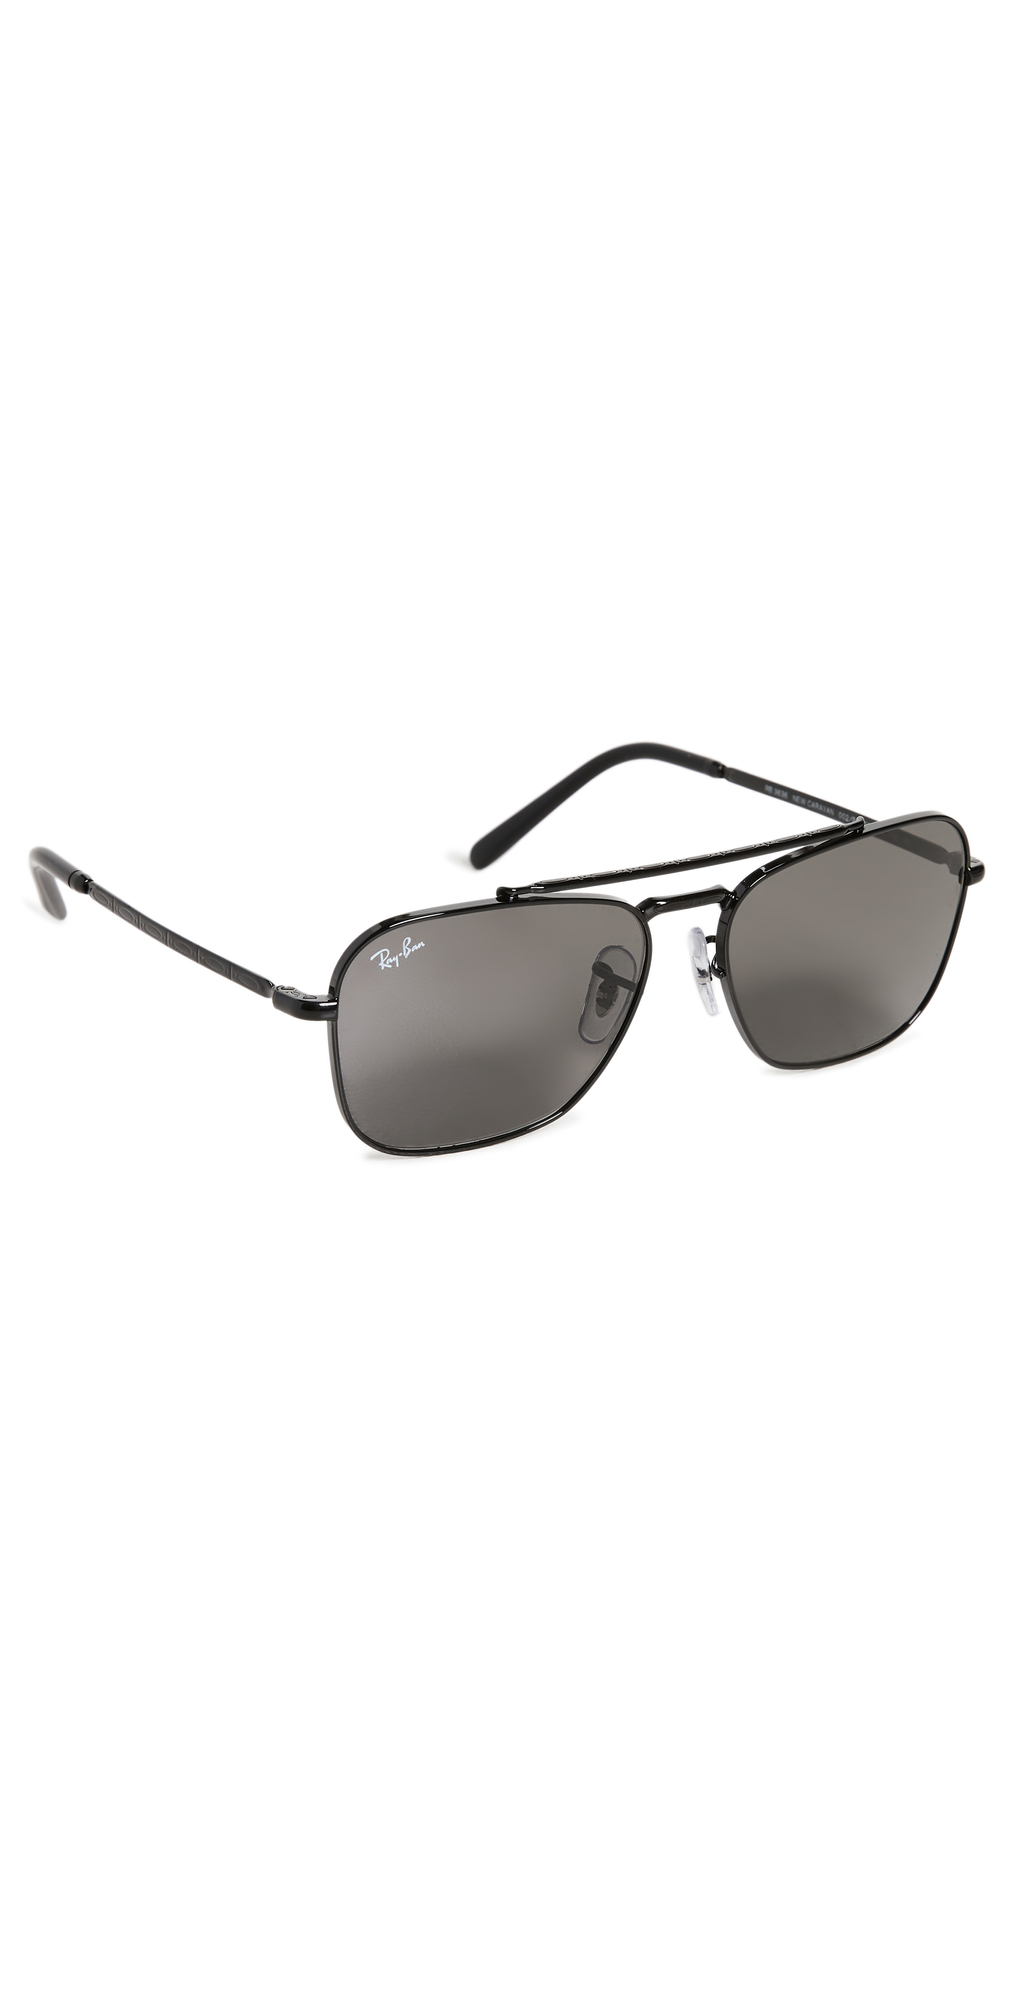 Ray-Ban ORB3636 Evolution Rectangular Aviator Sunglasses in black / grey